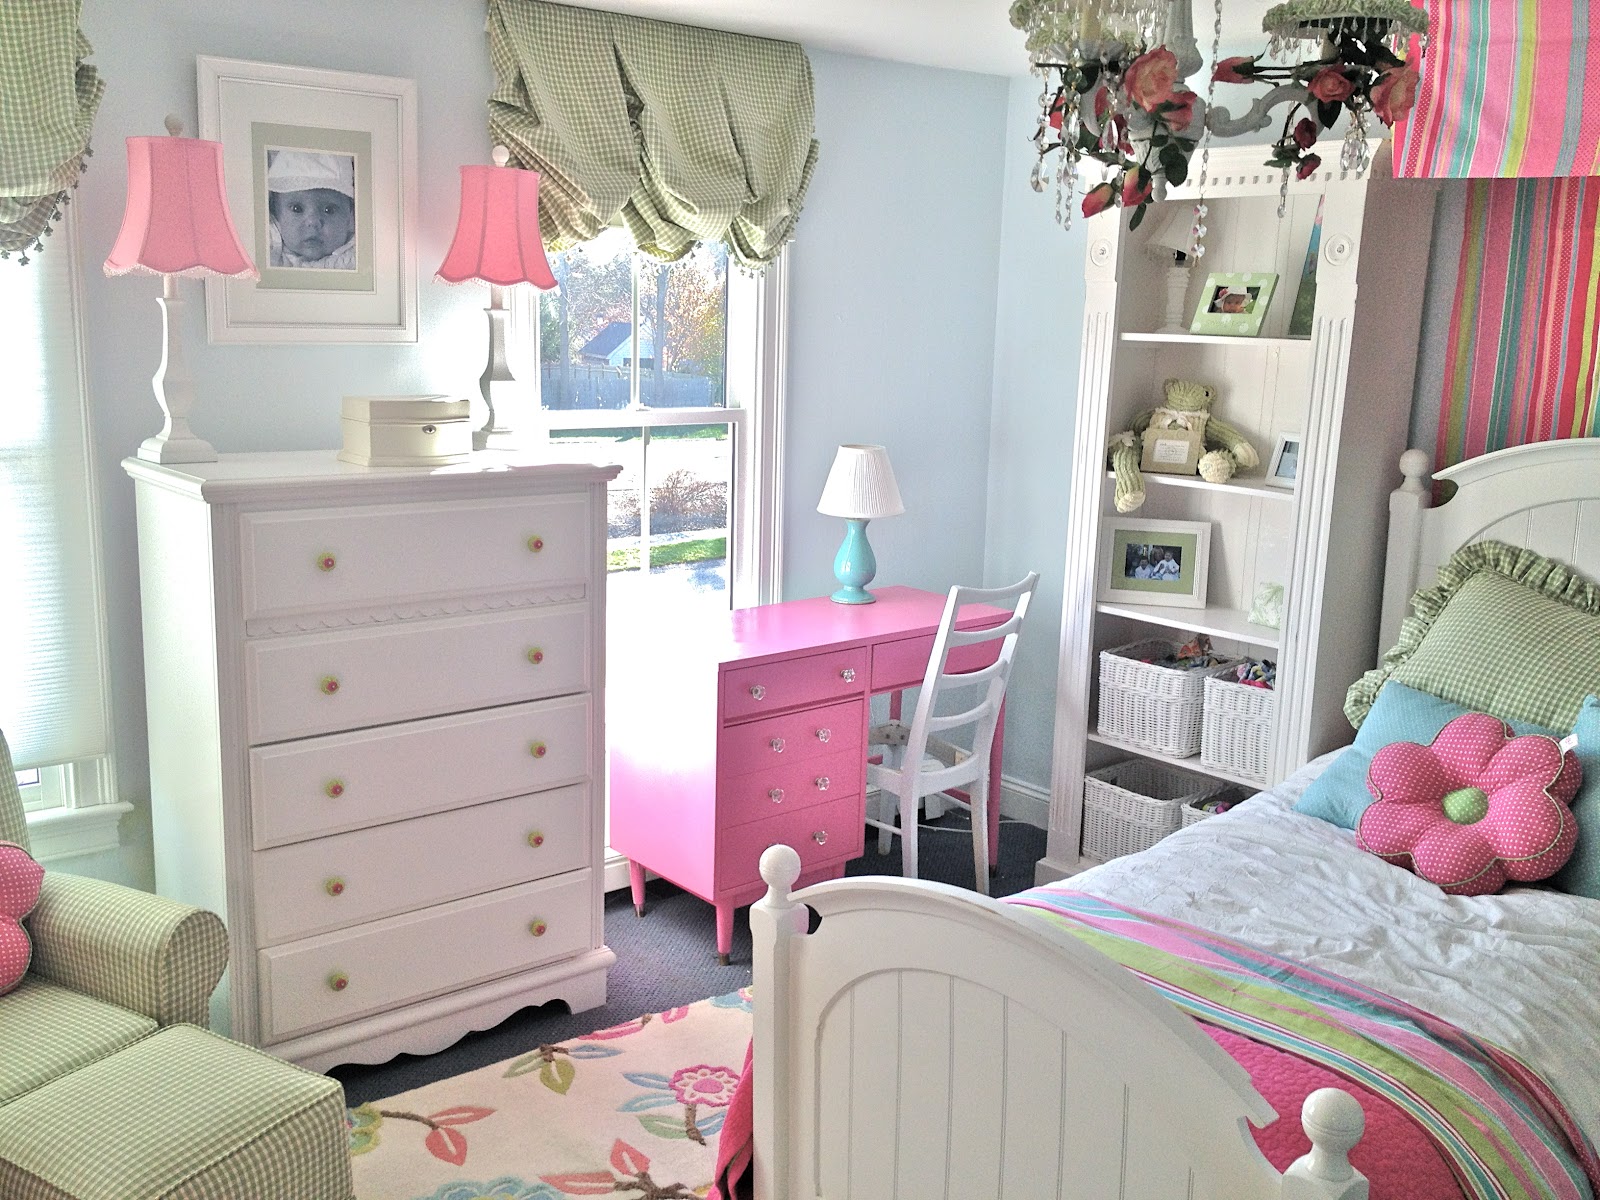 8 fancy bedroom decorating ideas for a teenage girl.jpg